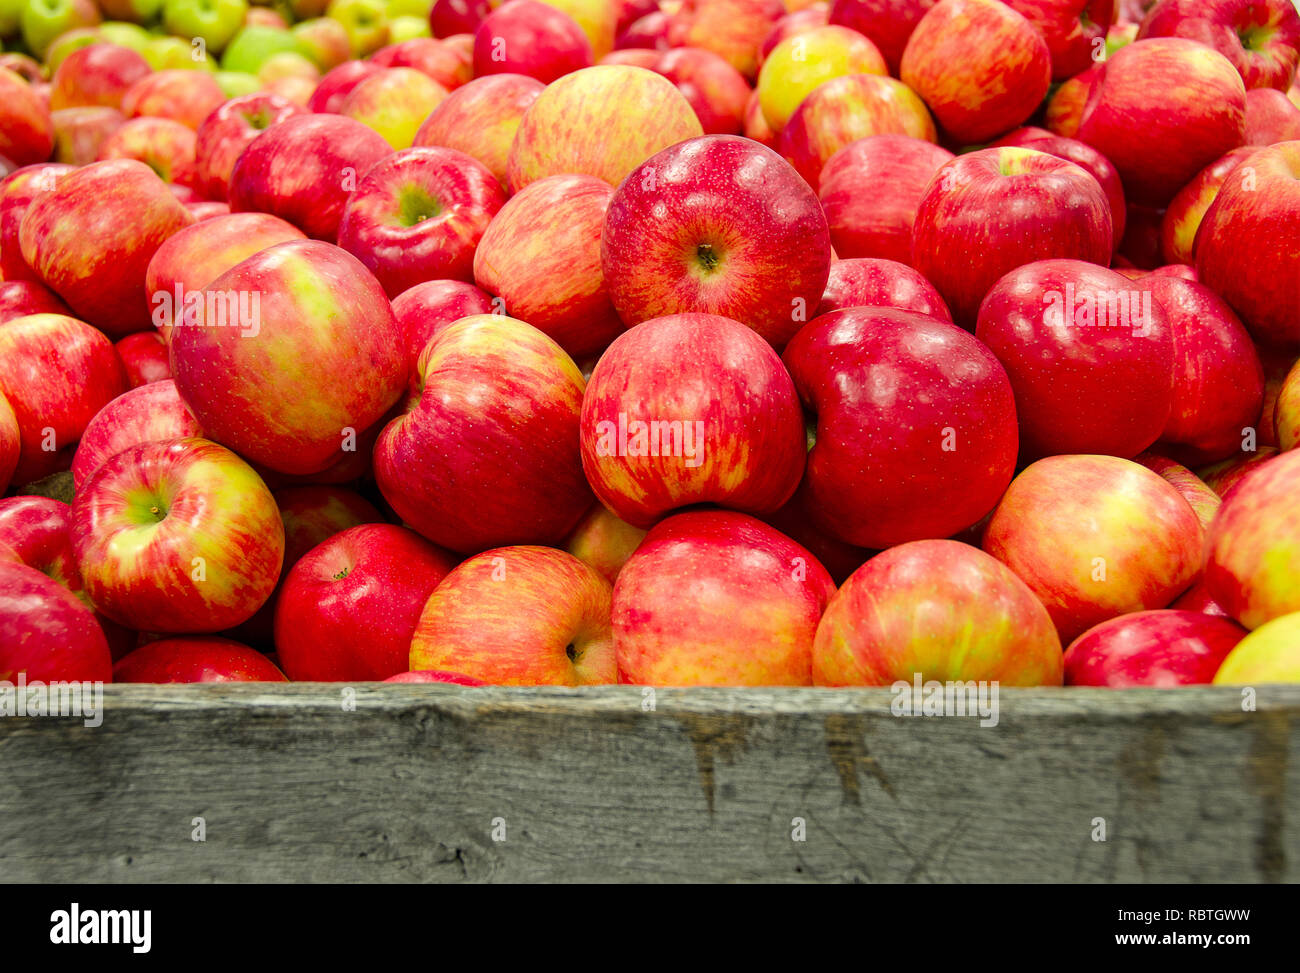 https://c8.alamy.com/compes/rbtgww/rojo-y-amarillo-michigan-manzanas-en-jaula-de-madera-rustica-rbtgww.jpg